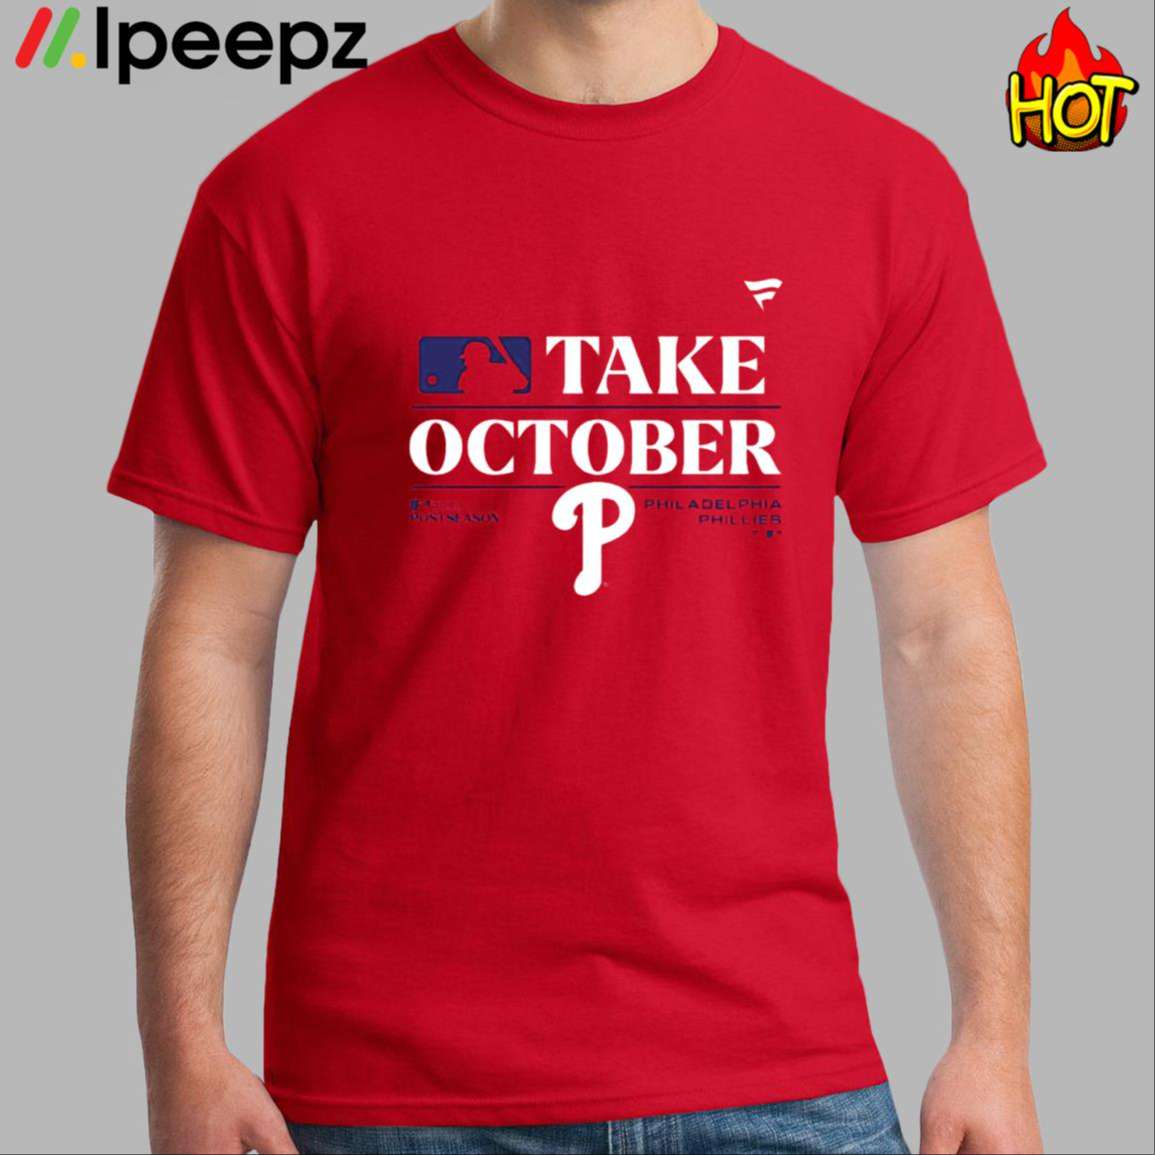 2023 Philadelphia Phillies Take October gear: Where to get